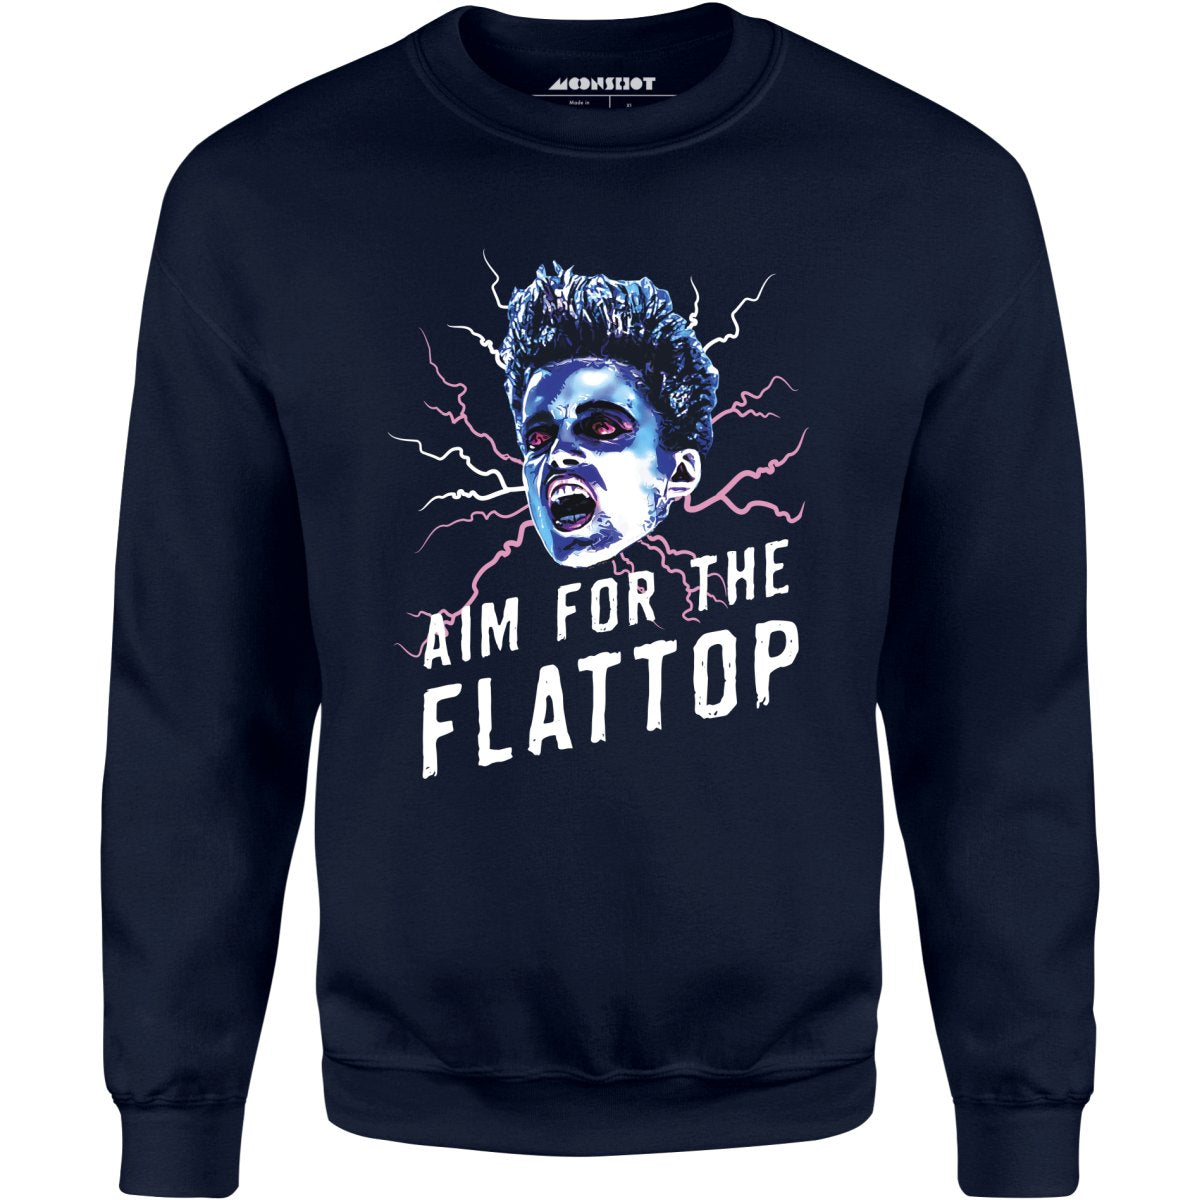 Aim For The Flattop - Unisex Sweatshirt